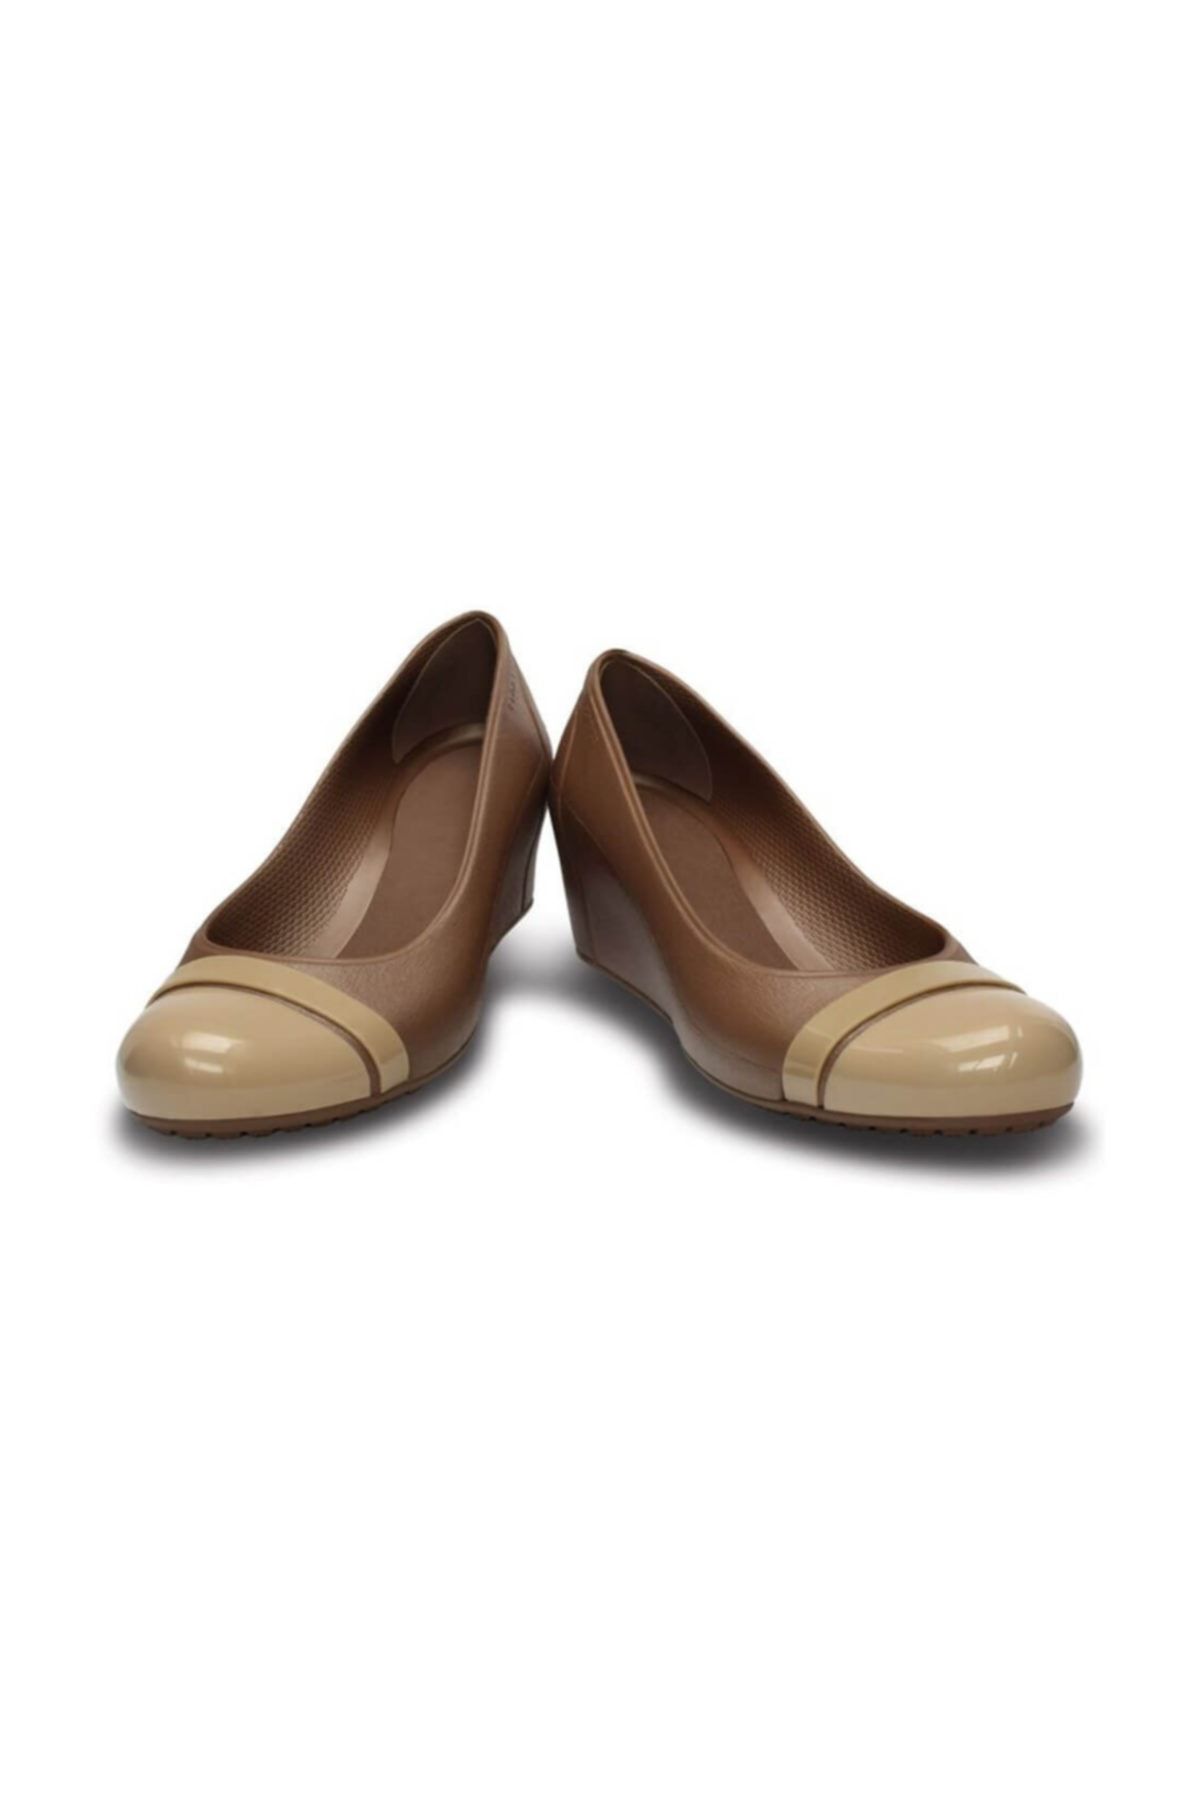 Crocs CAP TOE WEDGE BRONZE-GOLD Kahverengi Kadın Casual Ayakkabı 100528709